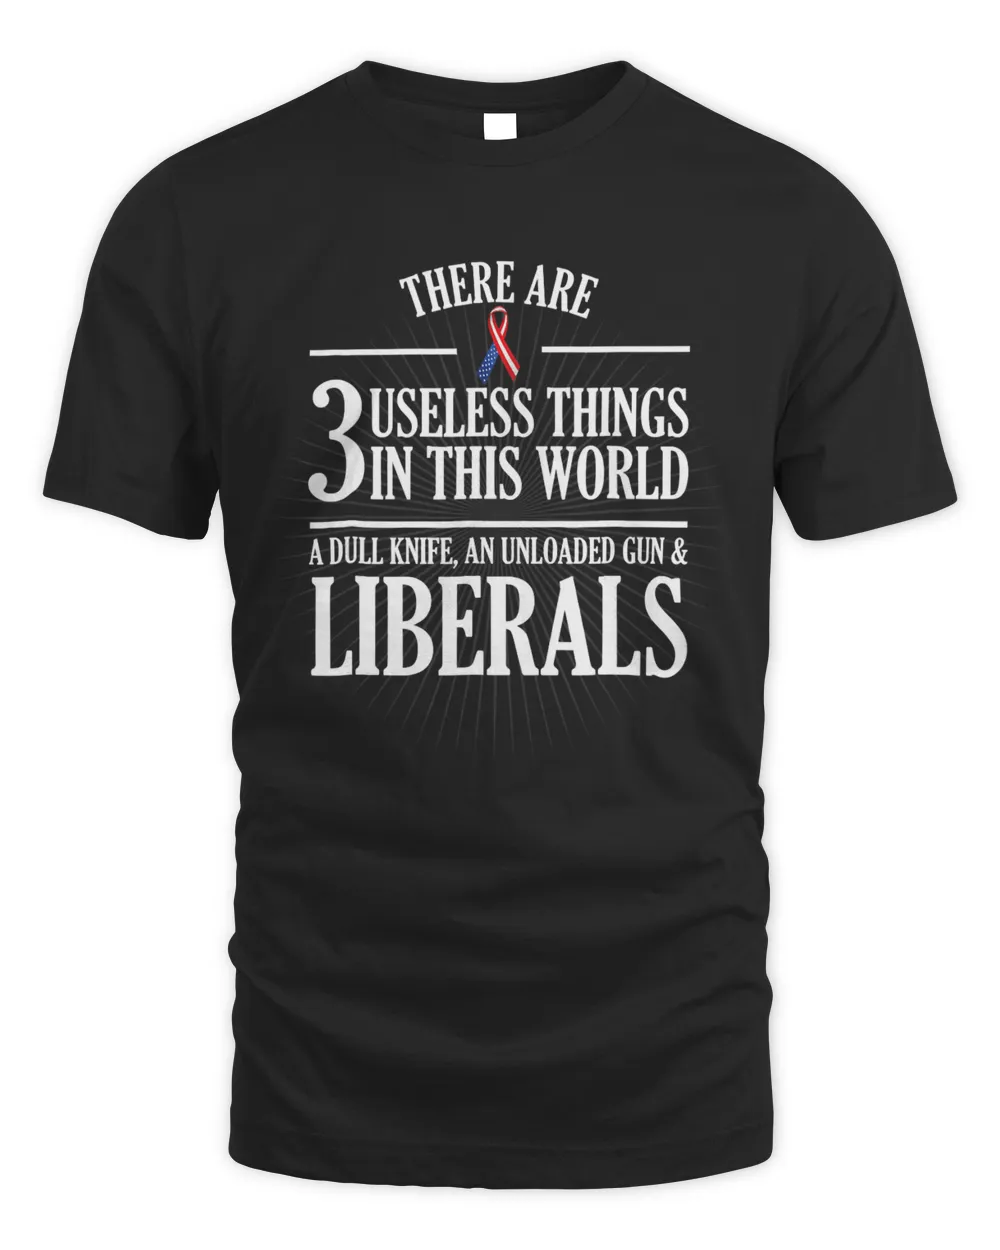 Anti Liberal T-Shirt Useless Liberals, Liberal Tears Shirt